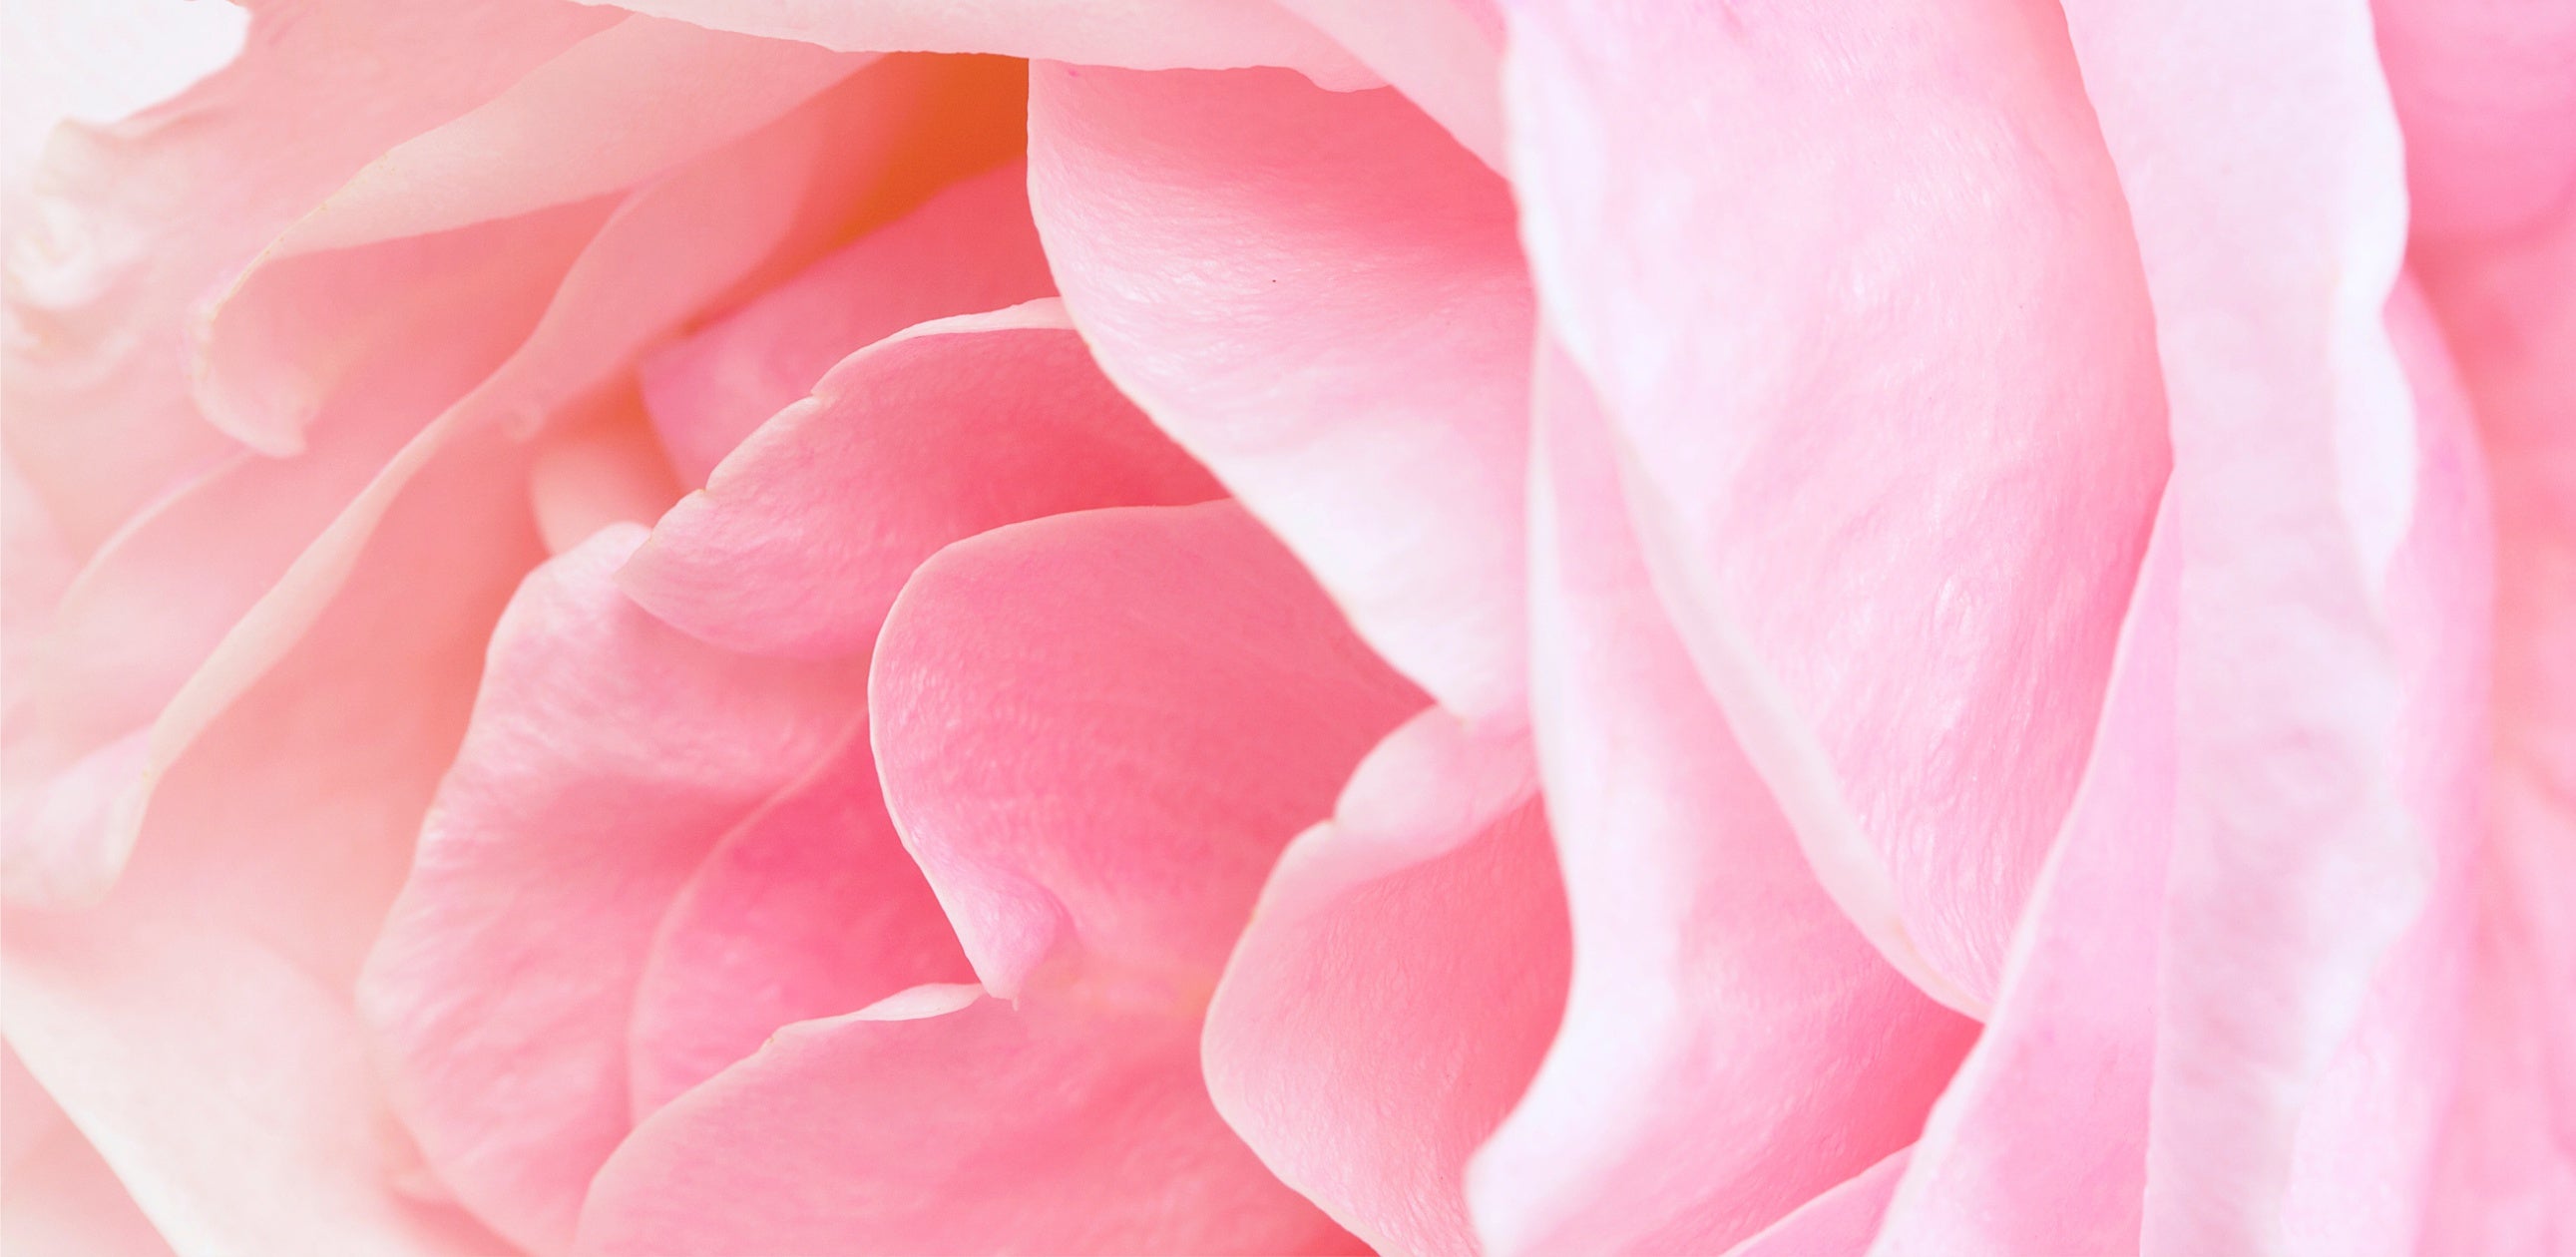 A close up image of a pink rose.